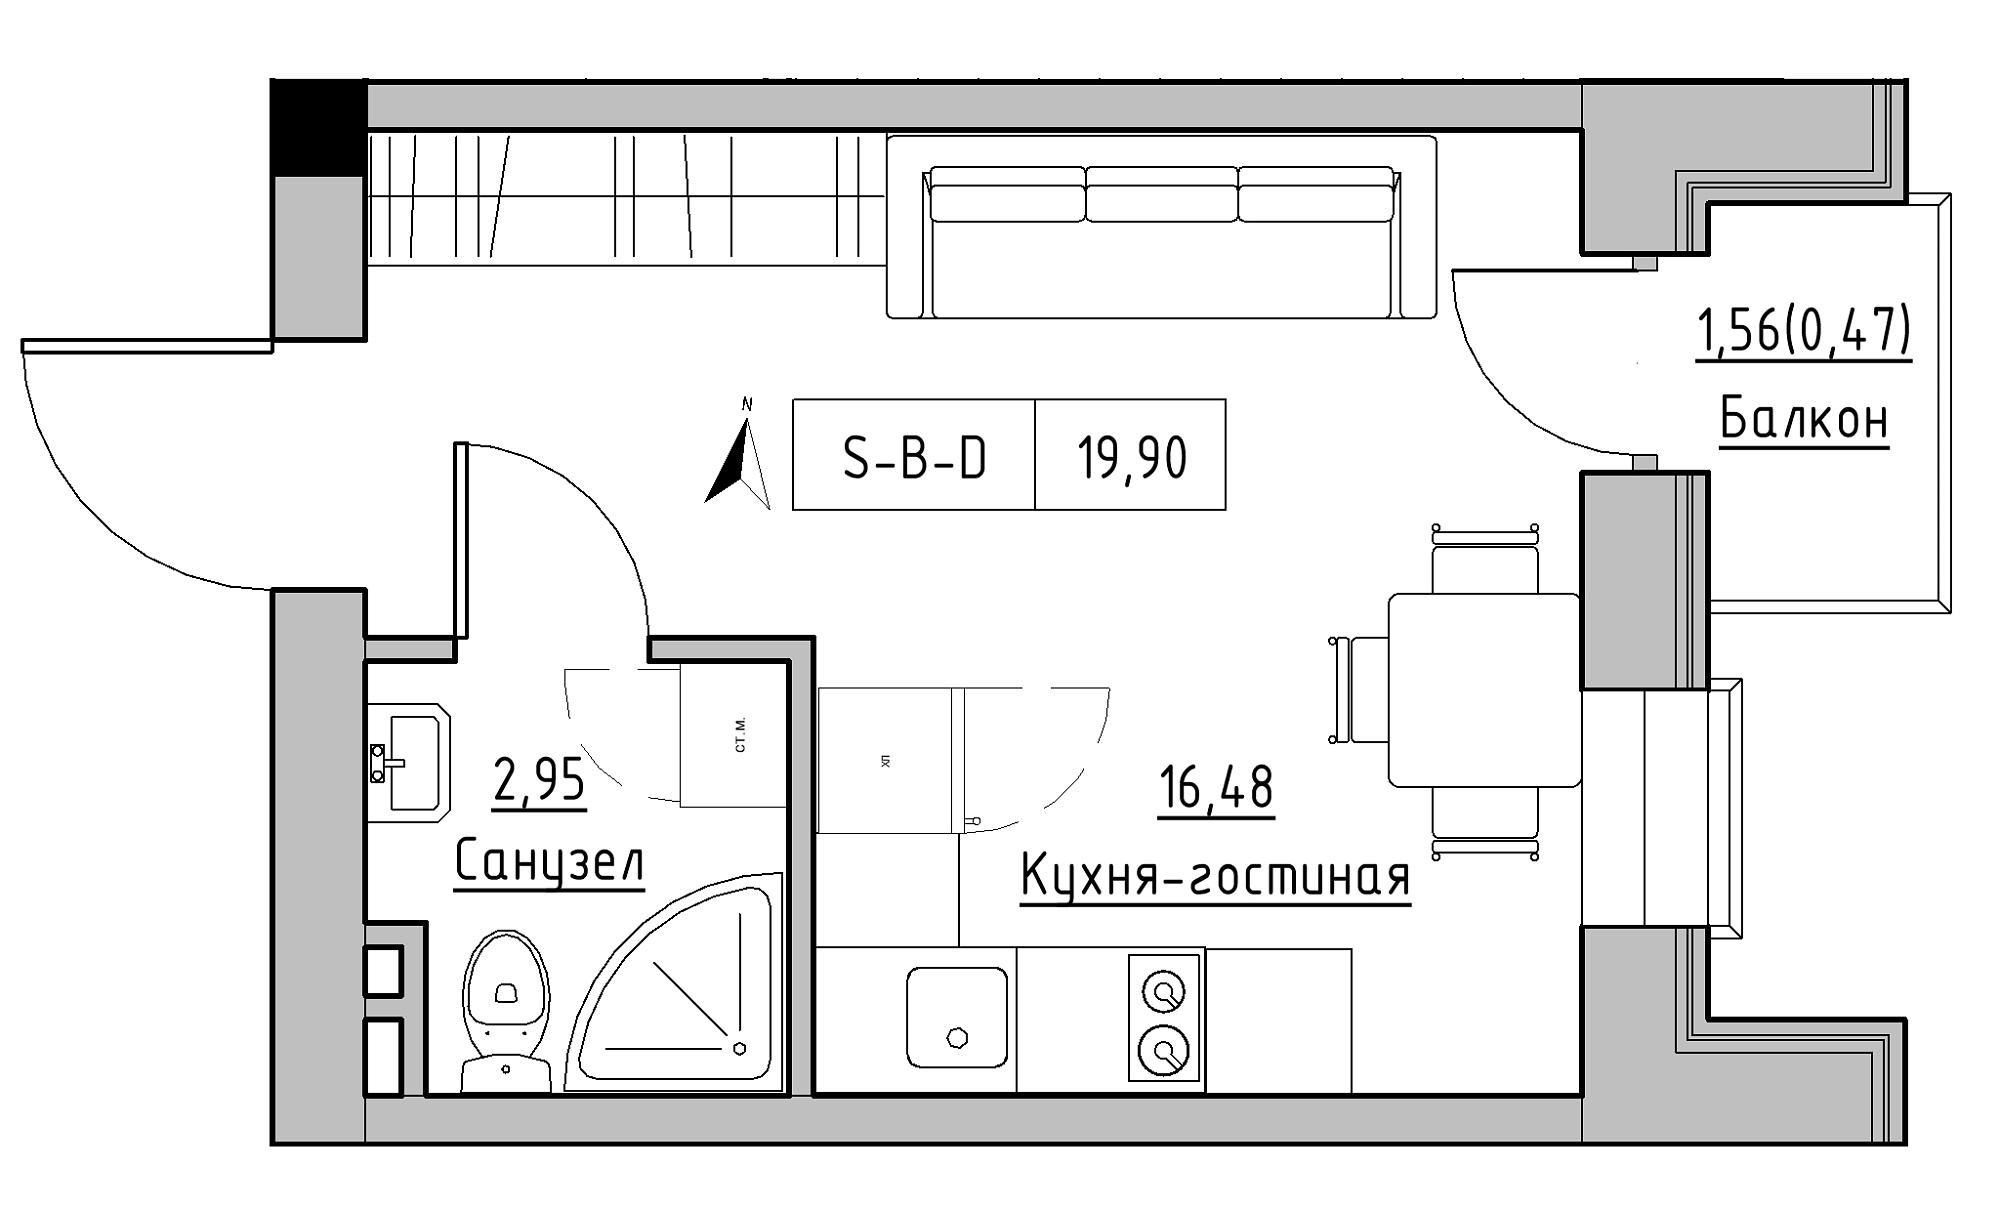 Planning Smart flats area 19.9m2, KS-023-02/0006.